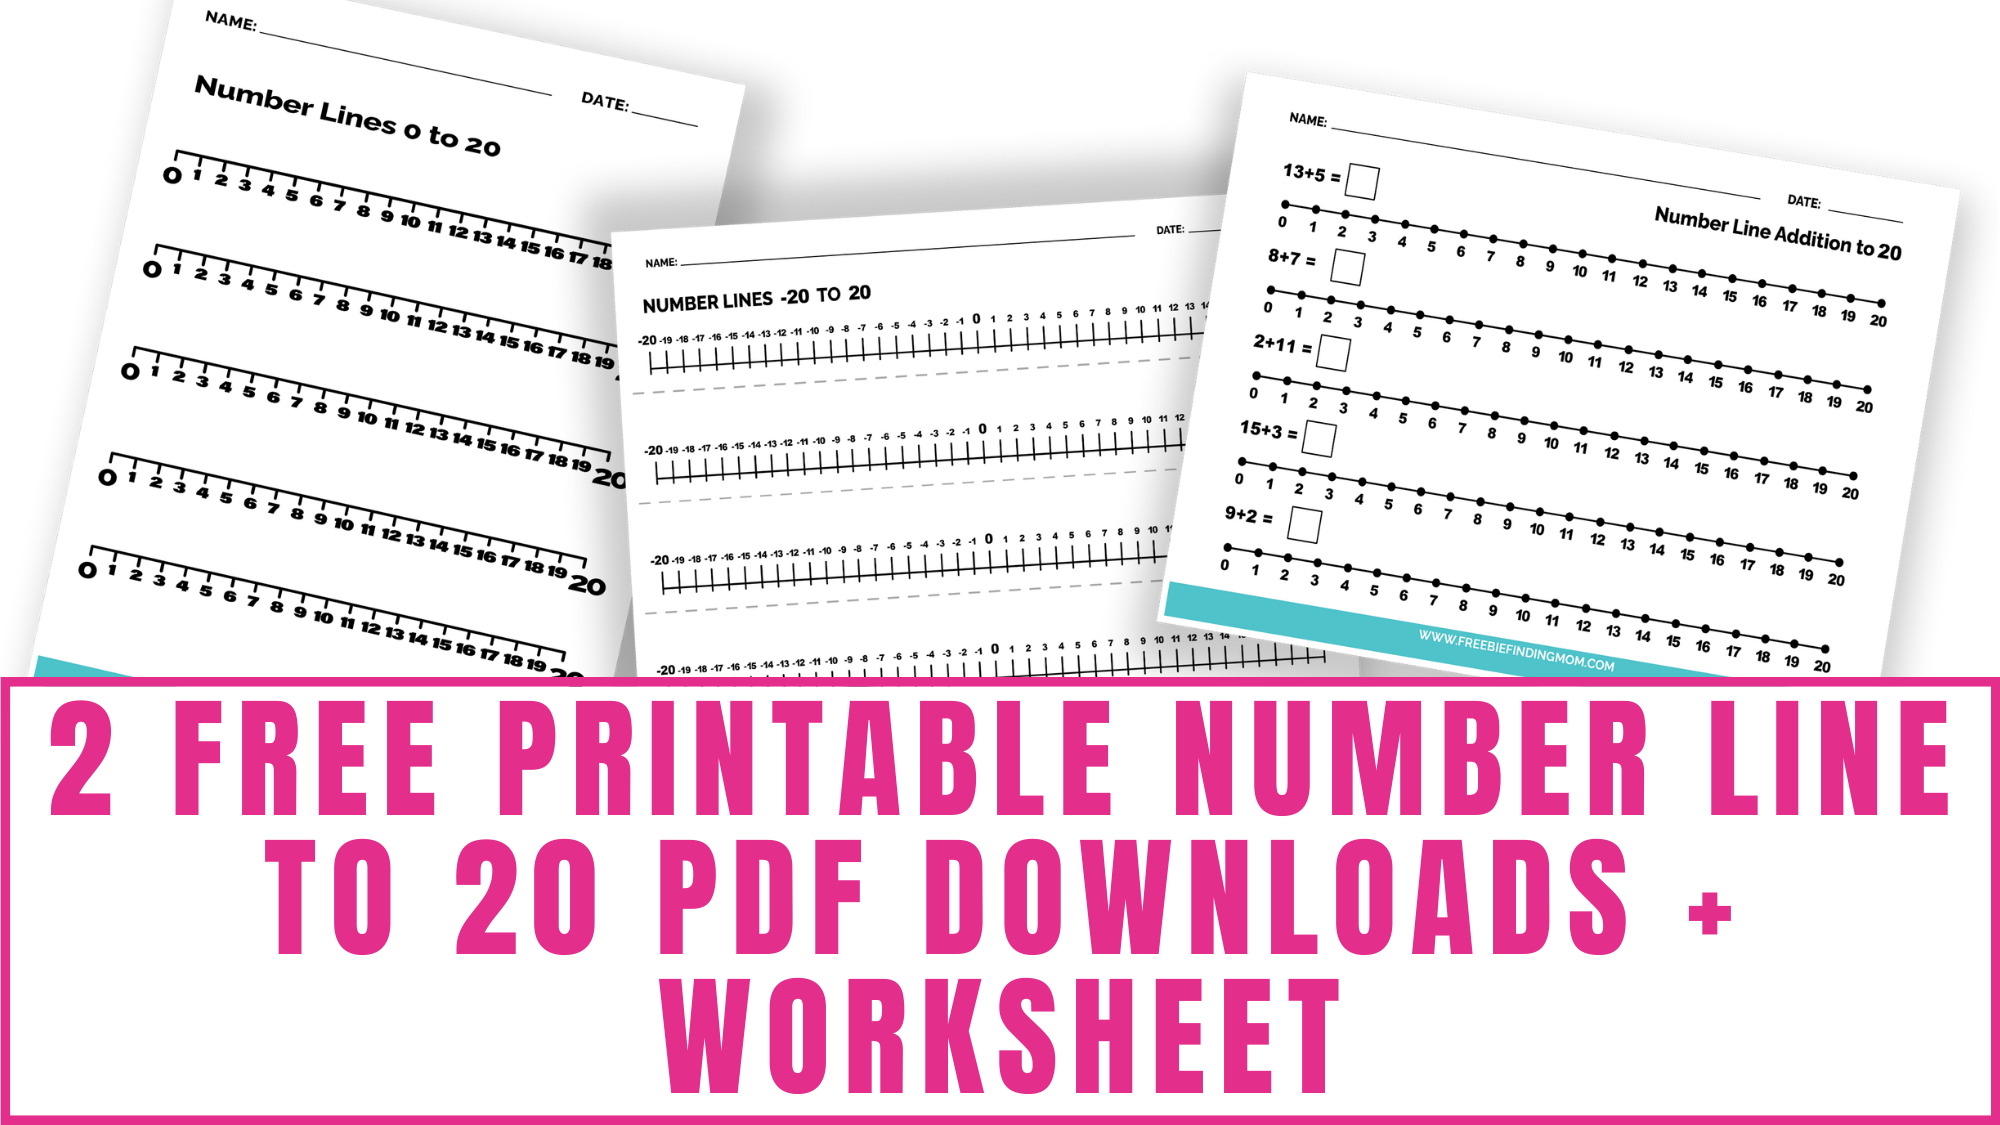 Free Printable Number Line To 20 Pdfs - Freebie Finding Mom - Number Line Negative To Positive Print Free 20